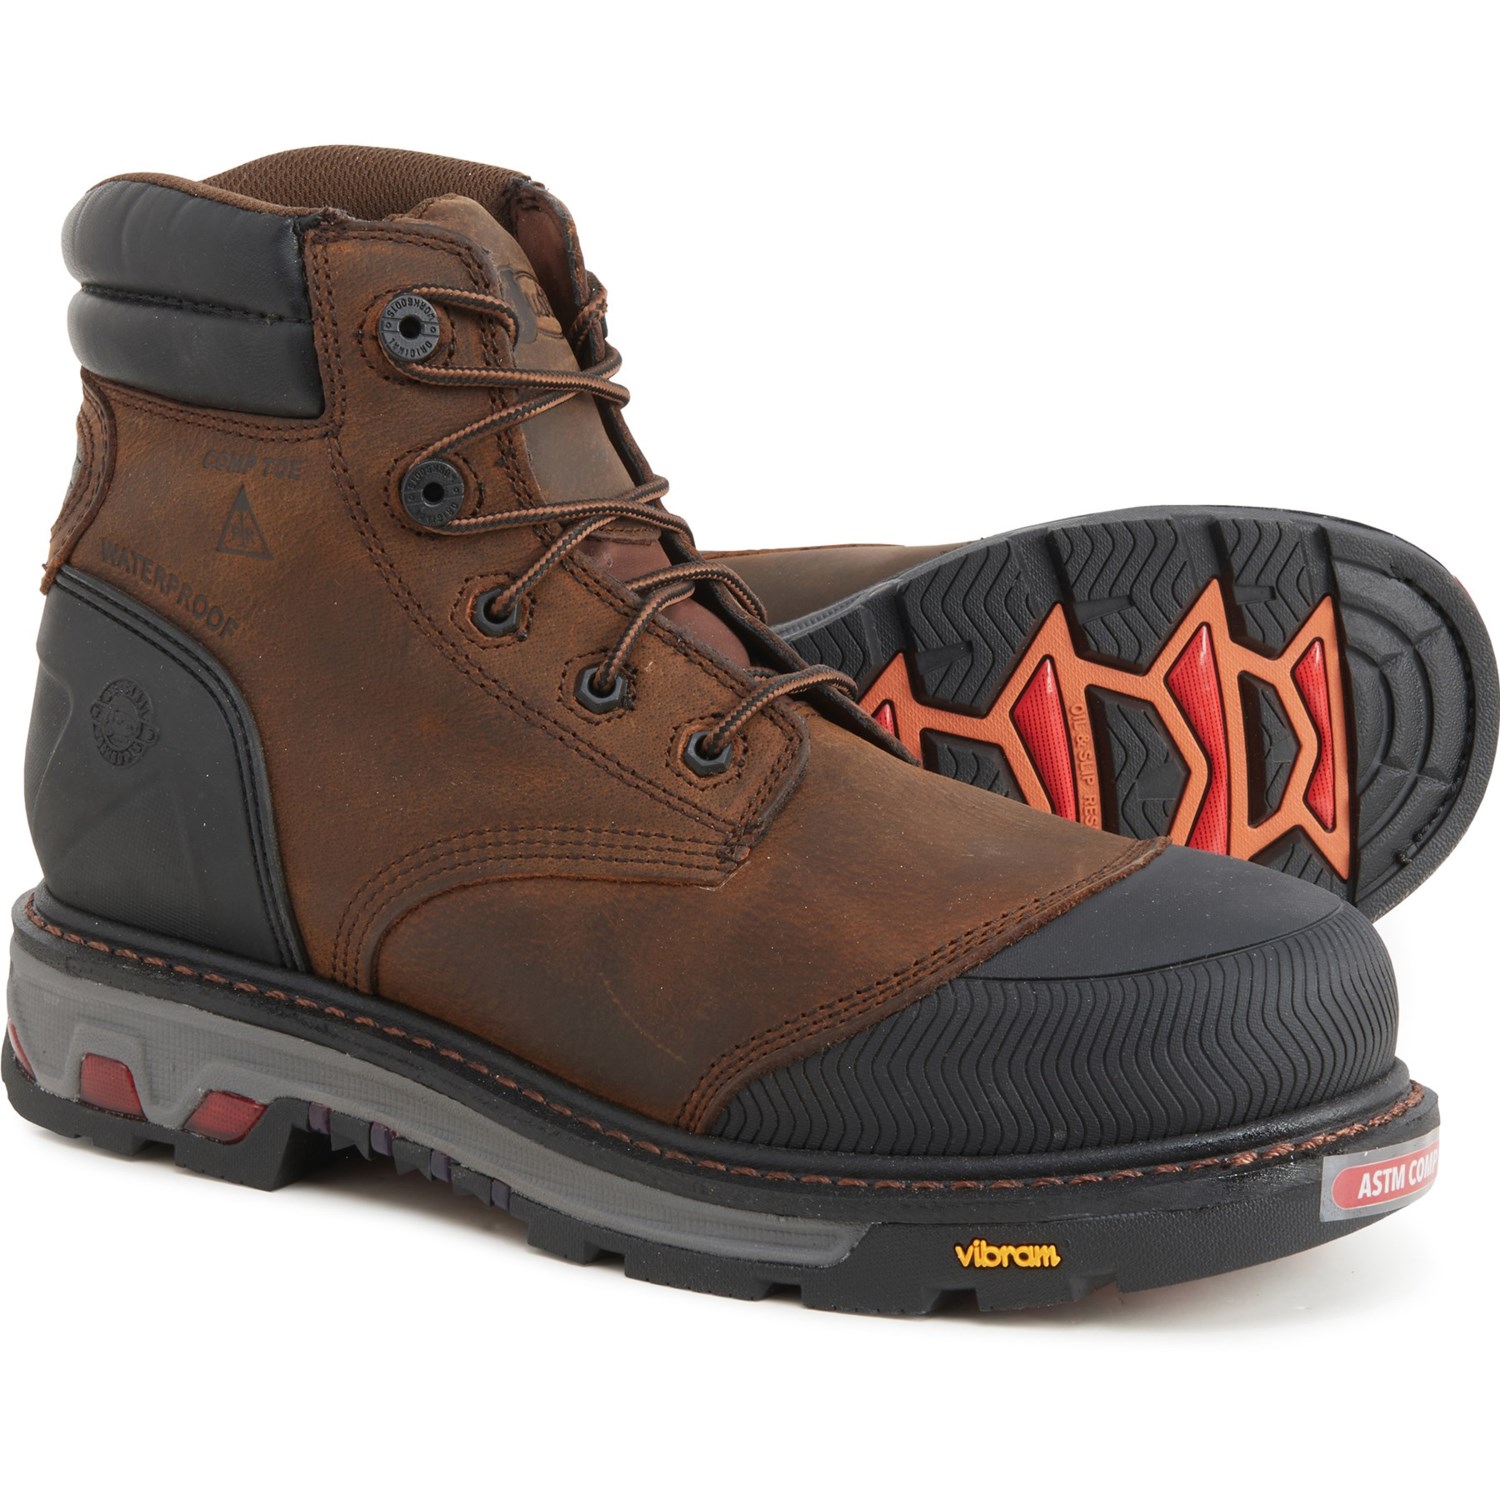 Justin Work Warhawk 6” Work Boots - Waterproof, Composite Safety Toe (For Men)